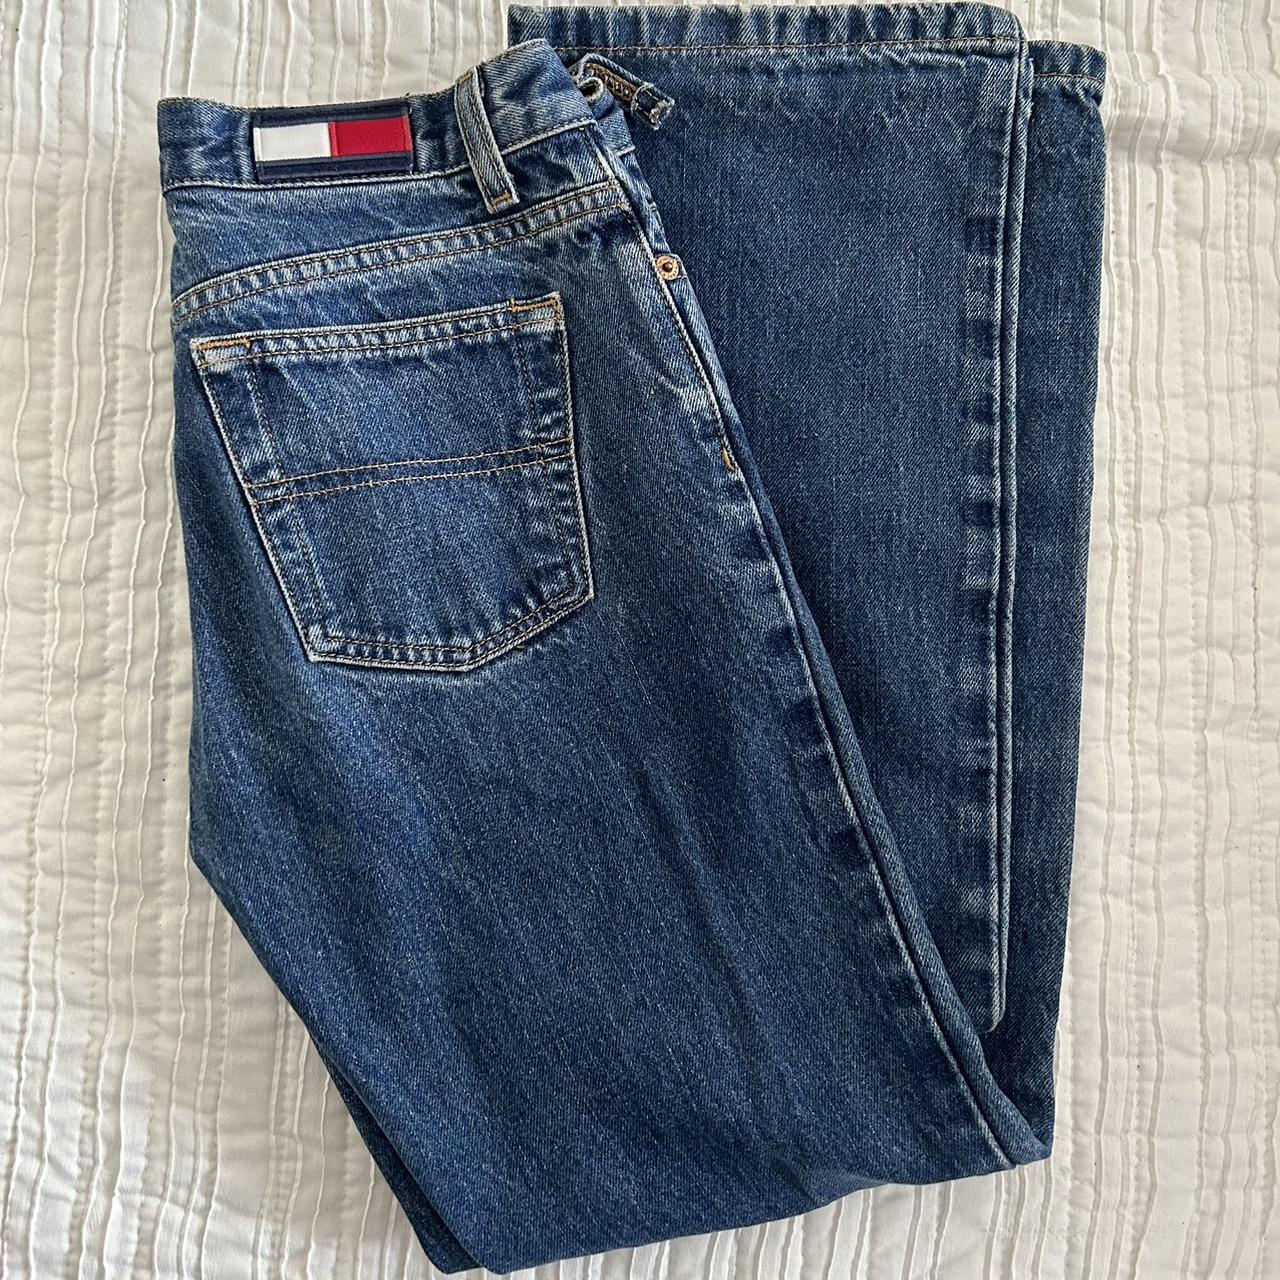 Tommy Hilfiger Women's Blue Jeans